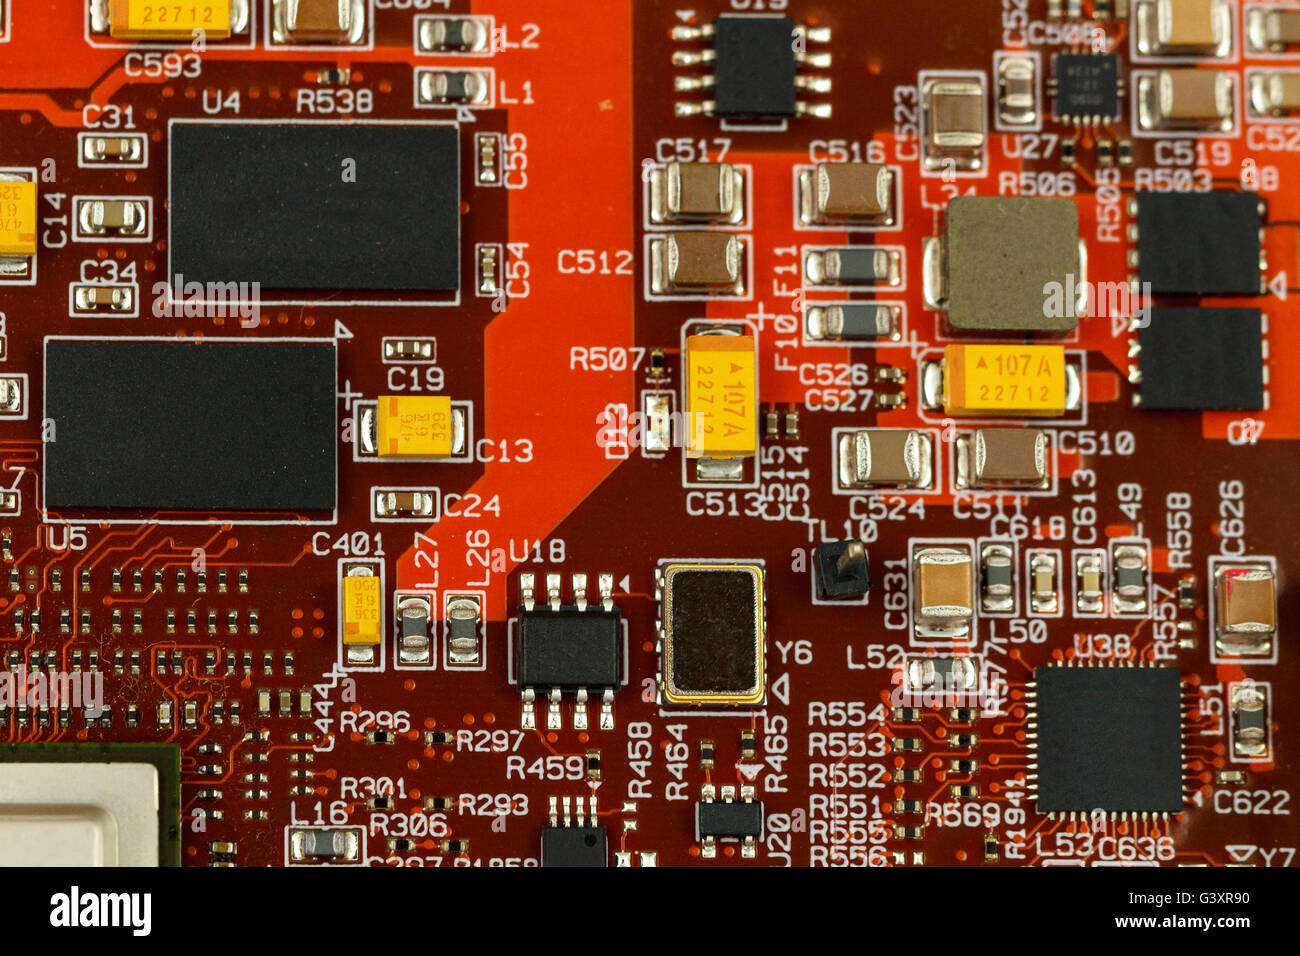 Printed circuit board with ICs, chip capacitors, tantalum capacitors, and chip resistors. Stock Photo